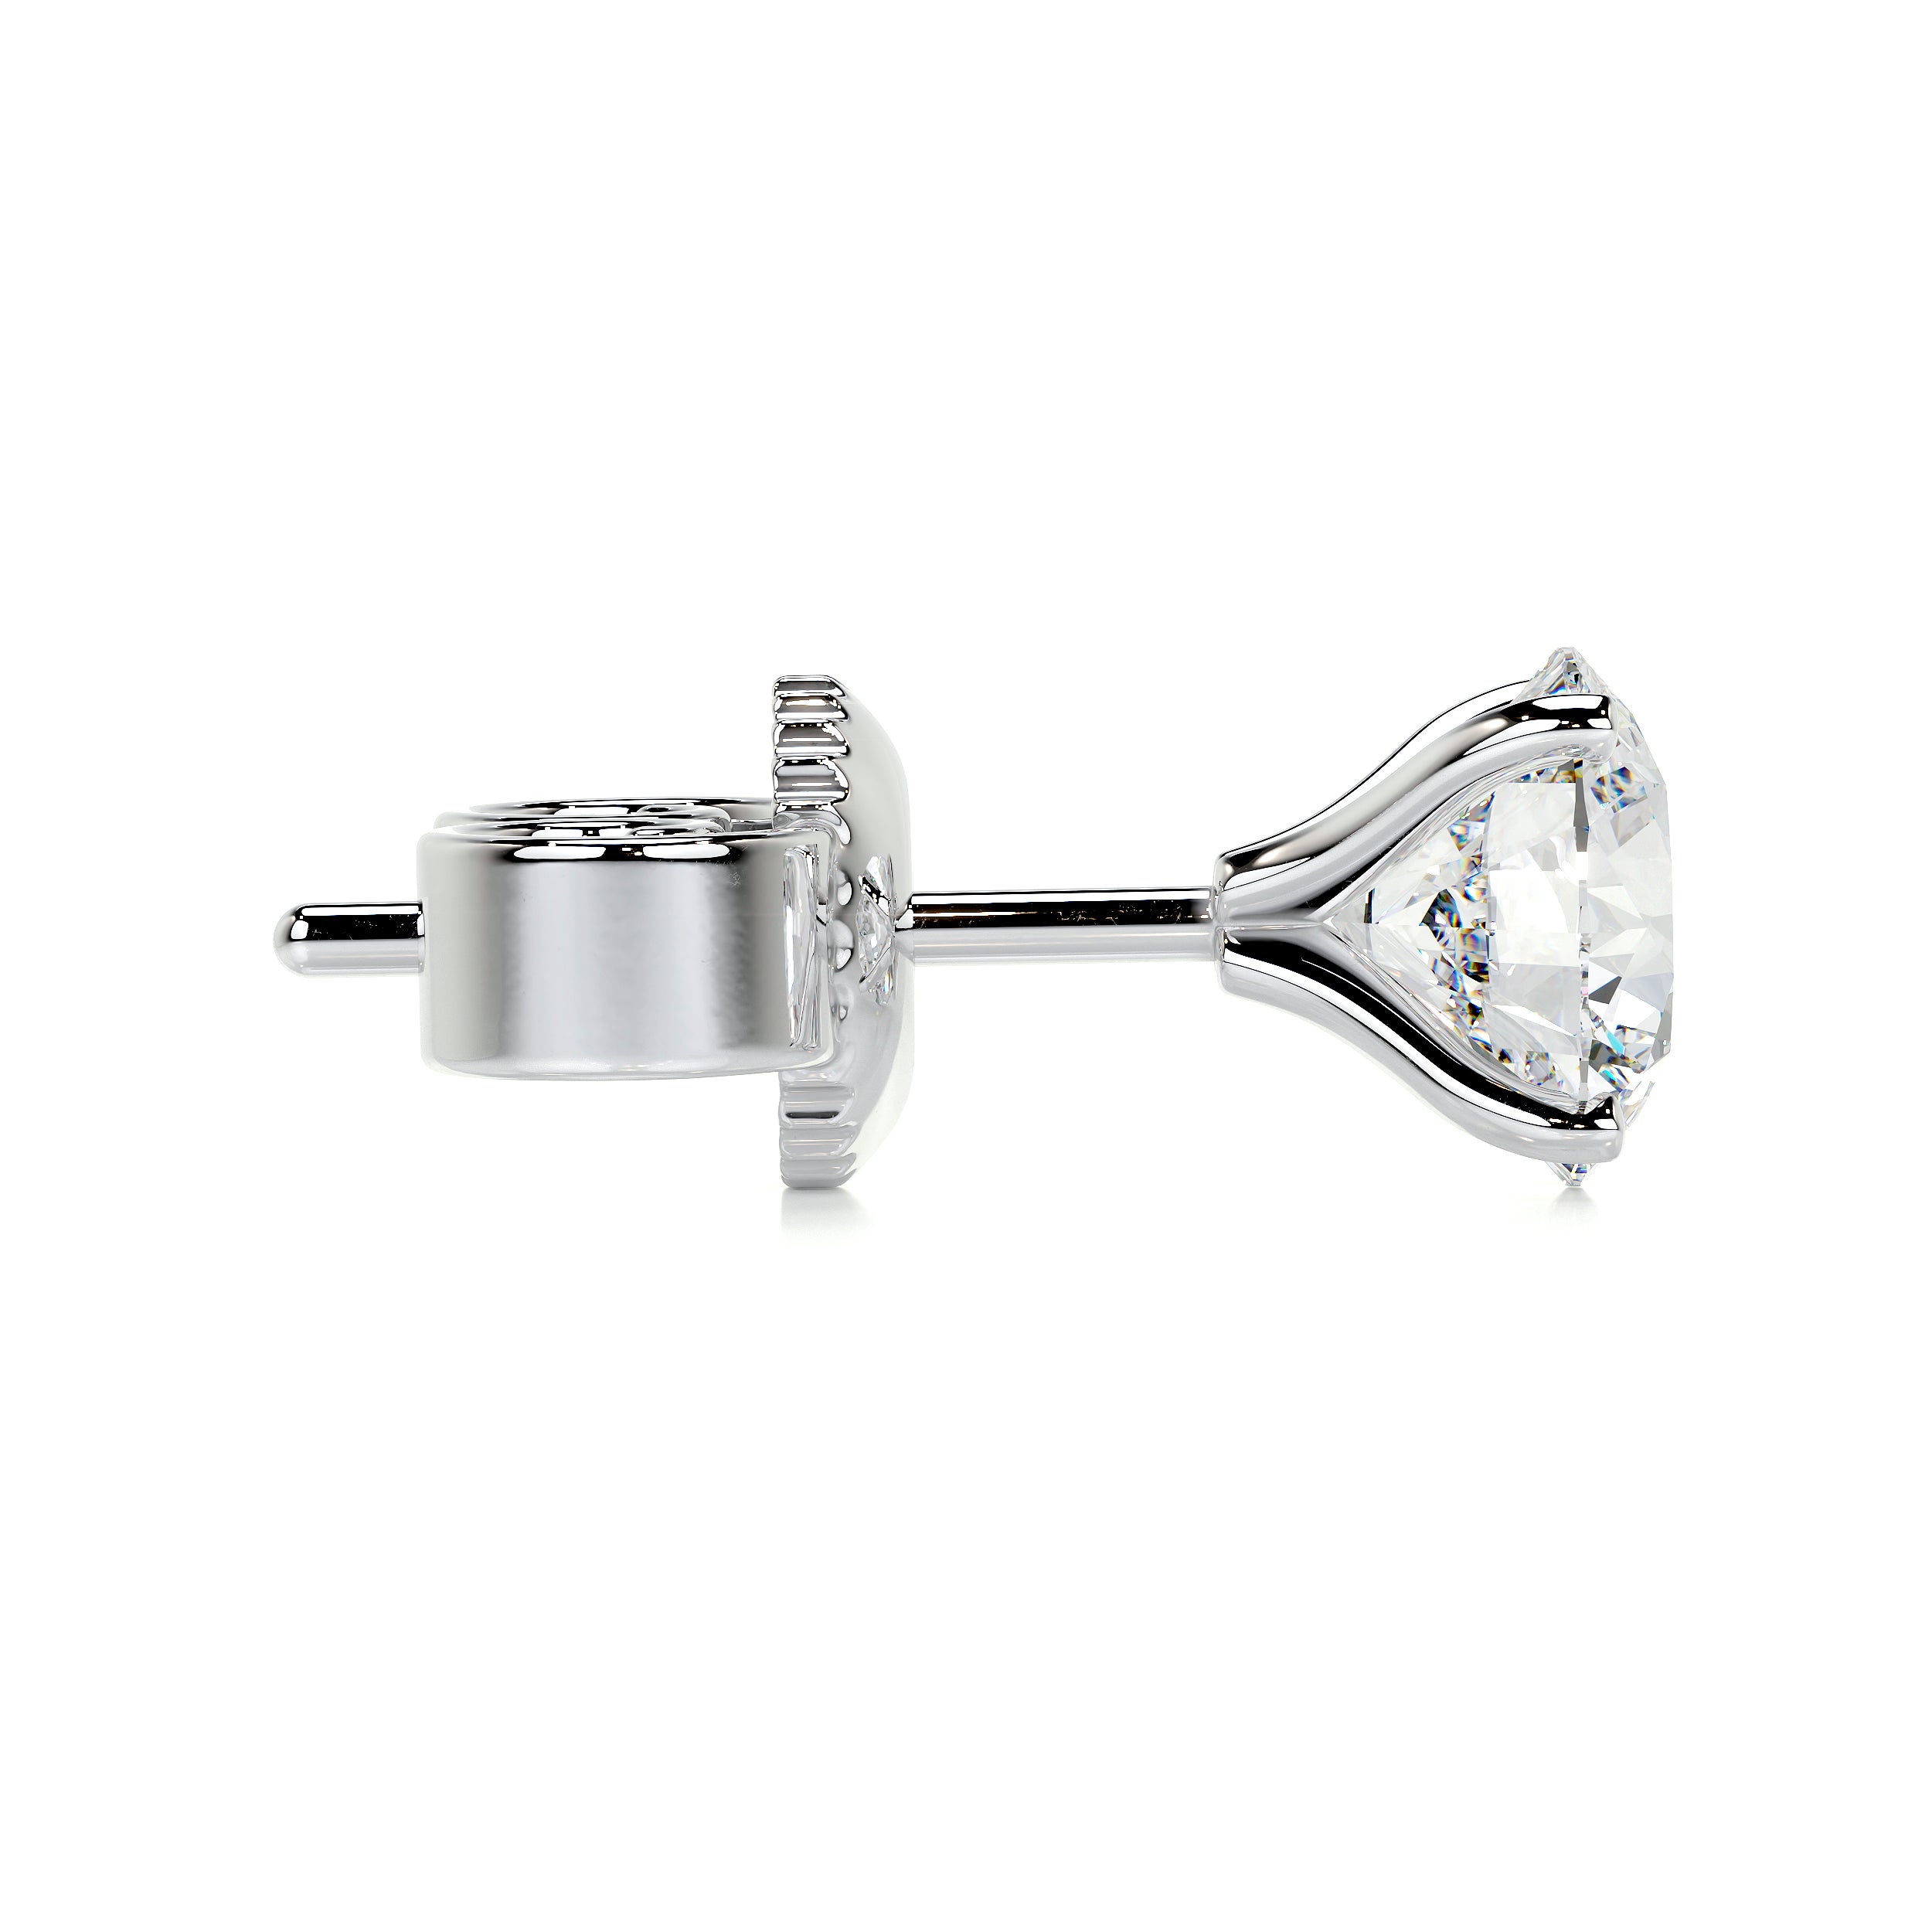 Allen Lab Grown Diamond Earrings -18K White Gold